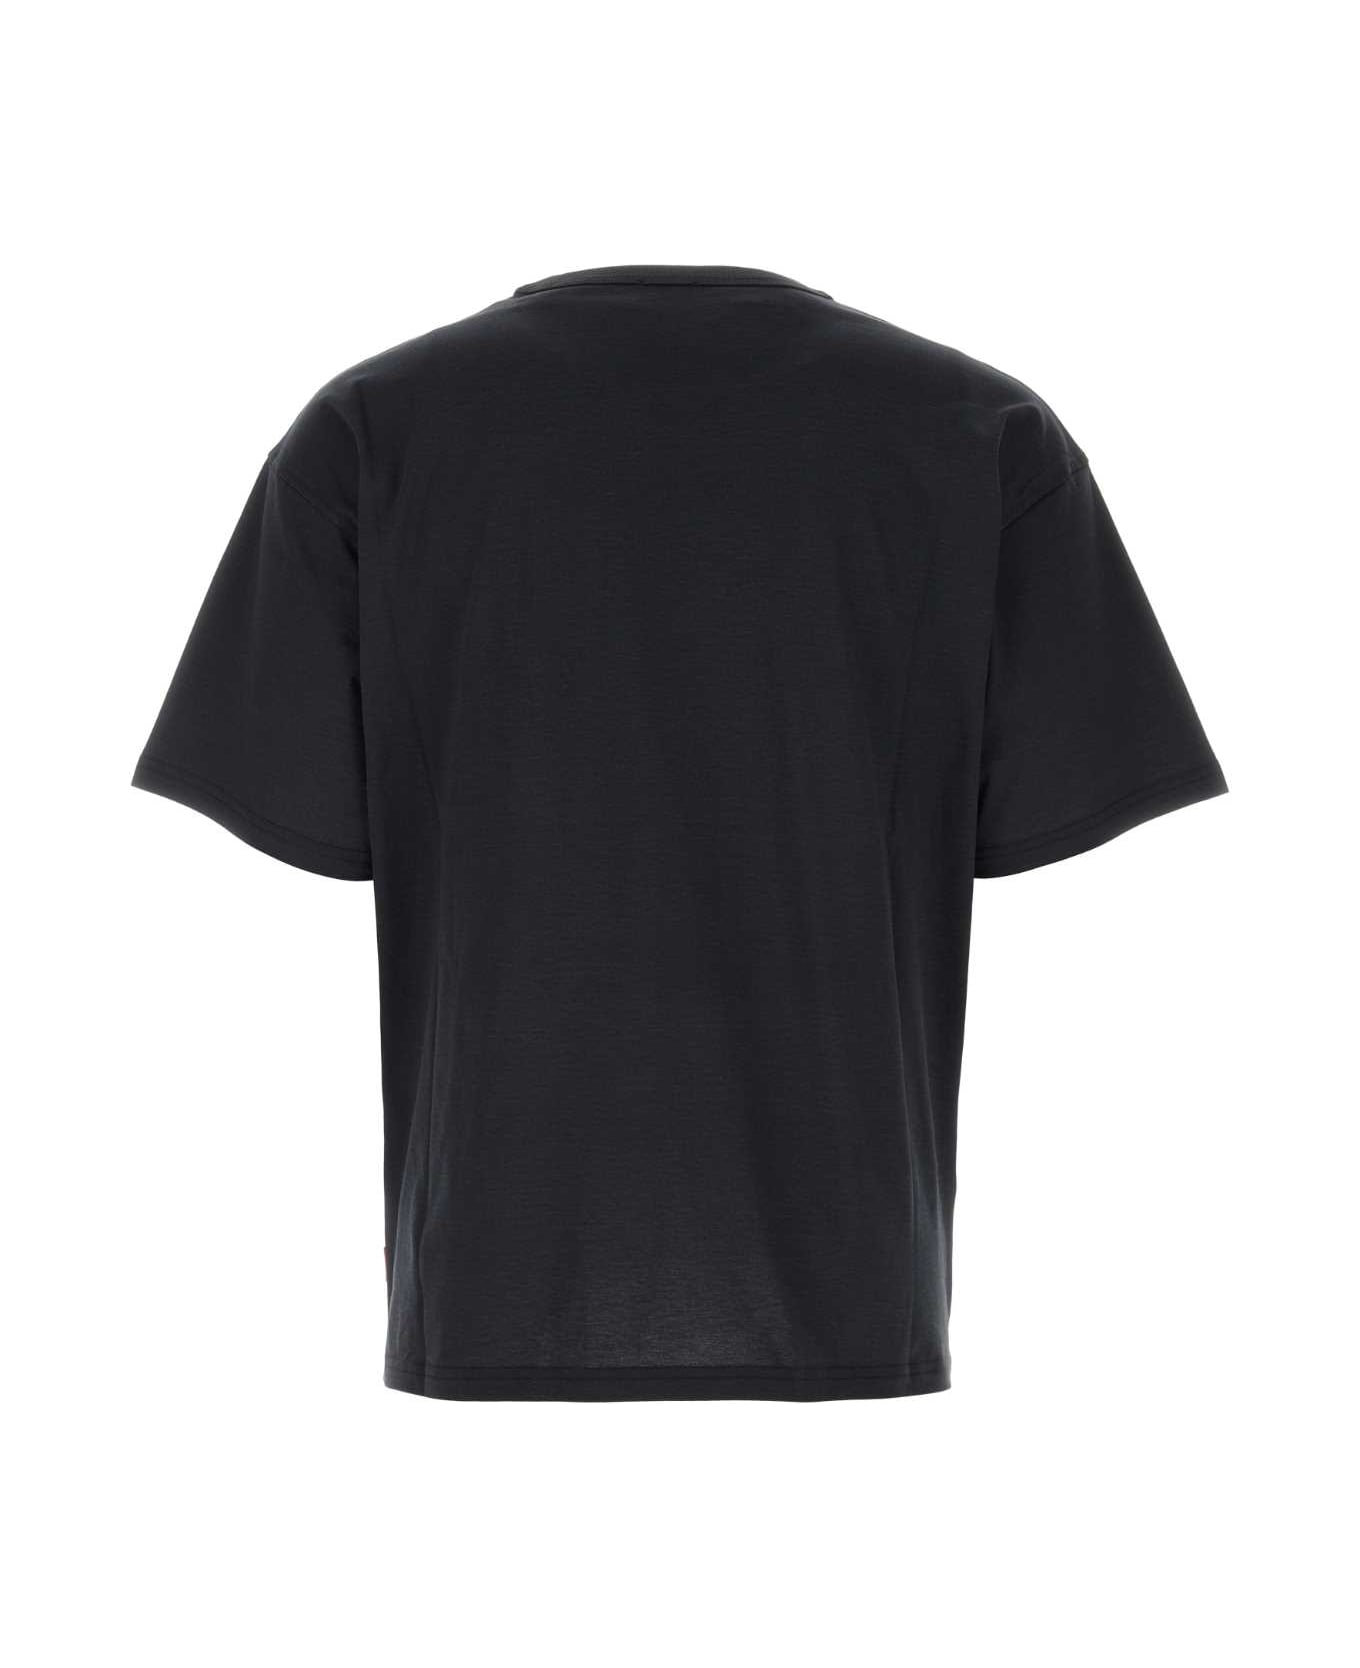 Diesel Black Cotton T-shirt - 9XXA